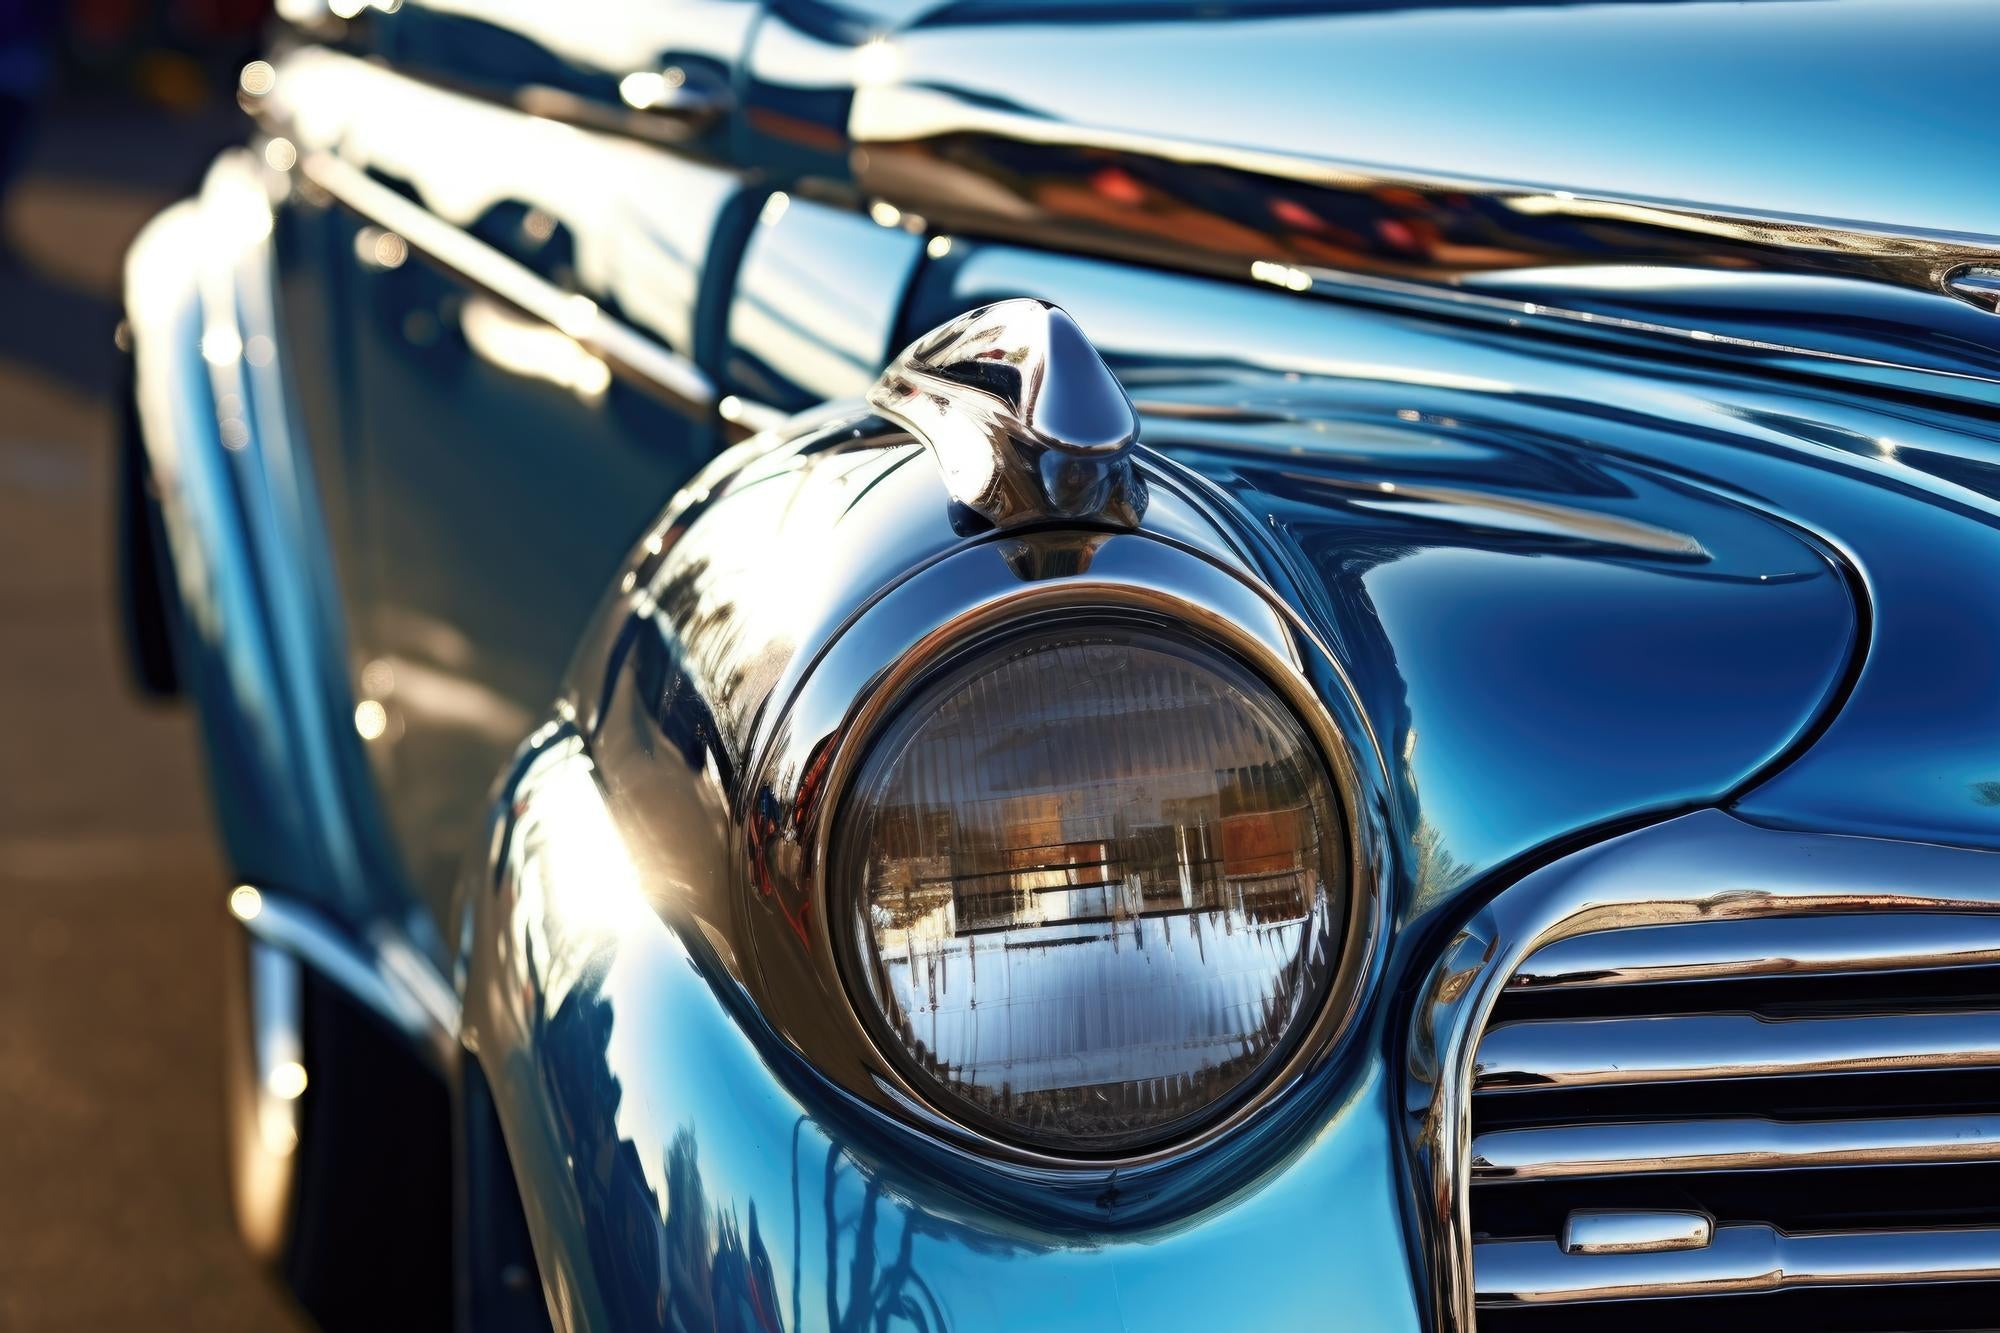 Shiny car stuff tutorial ✓ #detailing #detailing #detailingcars